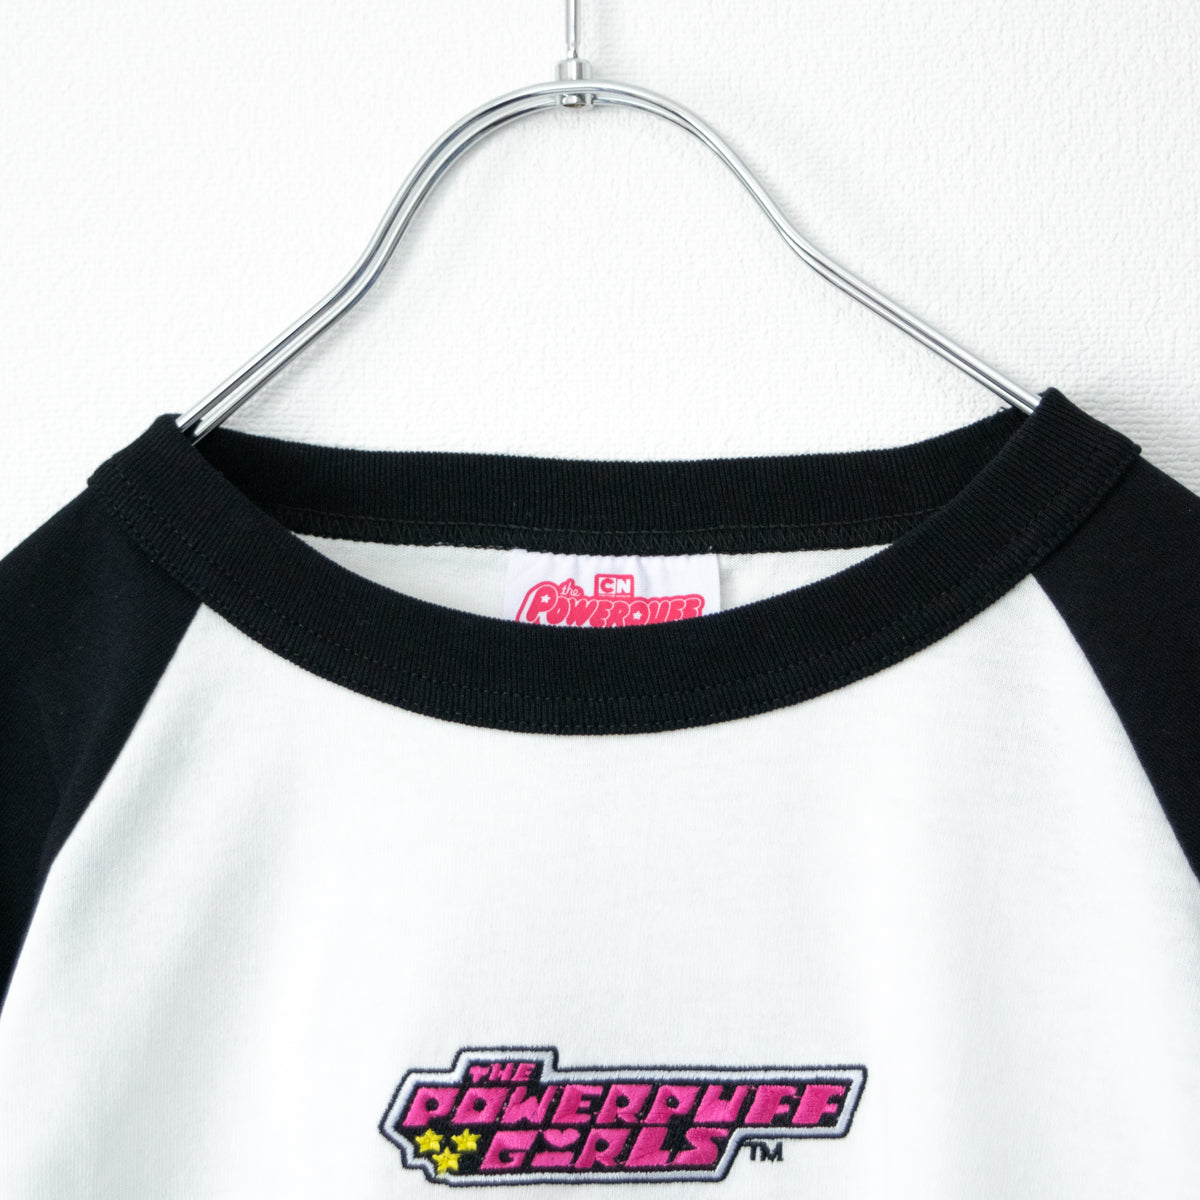 The Powerpuff Girls Raglan T-shirt Short length WHITE/BLACK